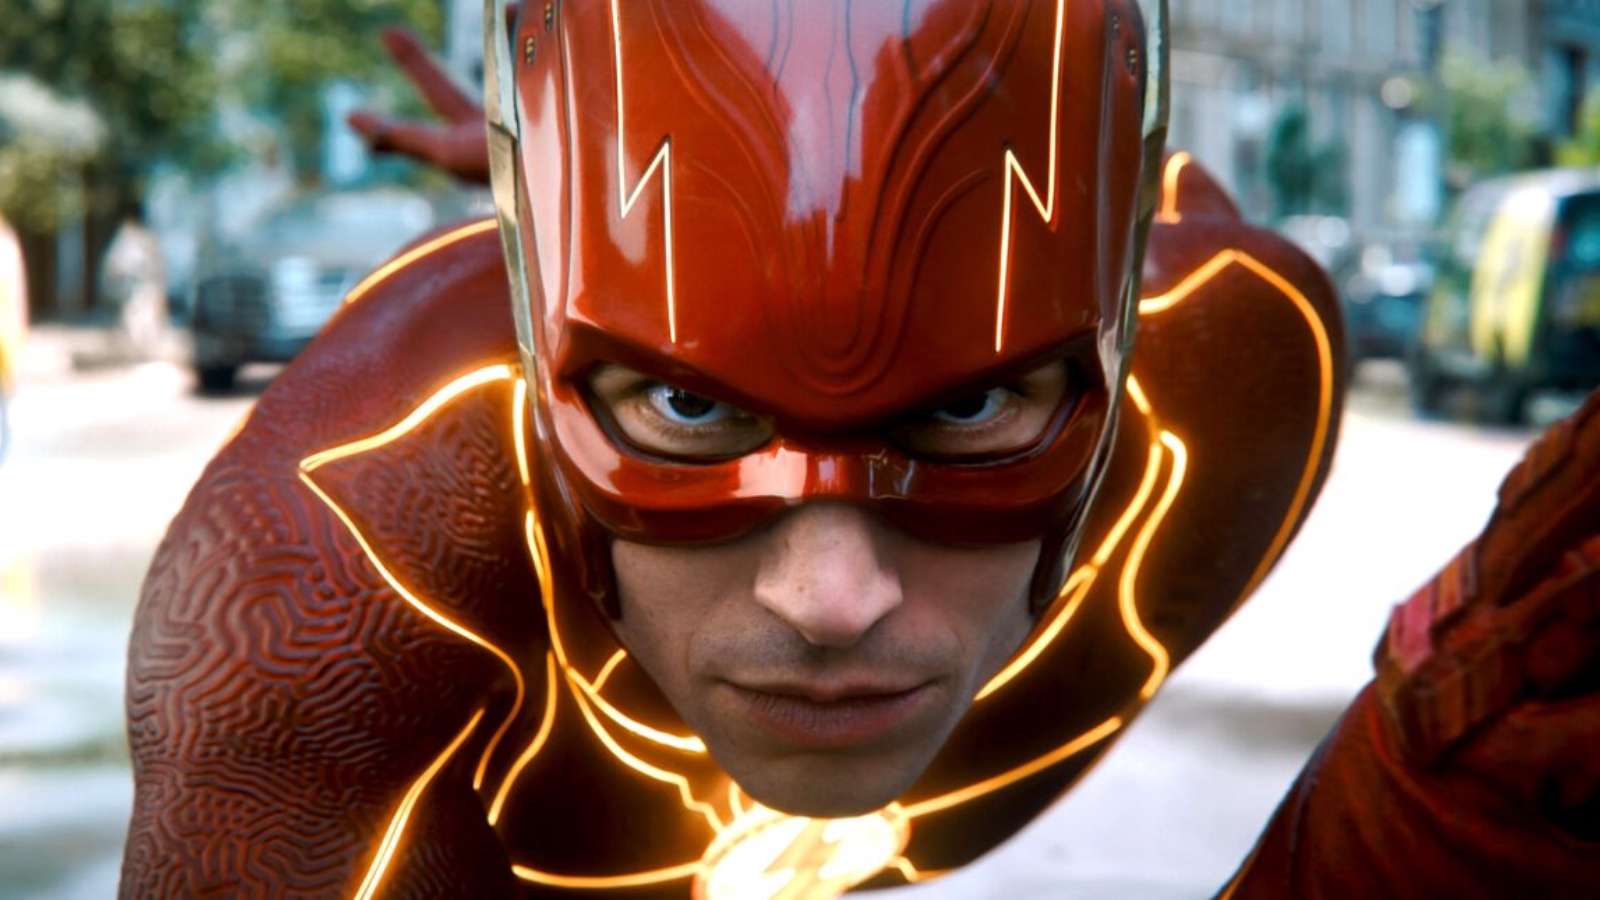 Ezra Miller in the DCEU movie The Flash